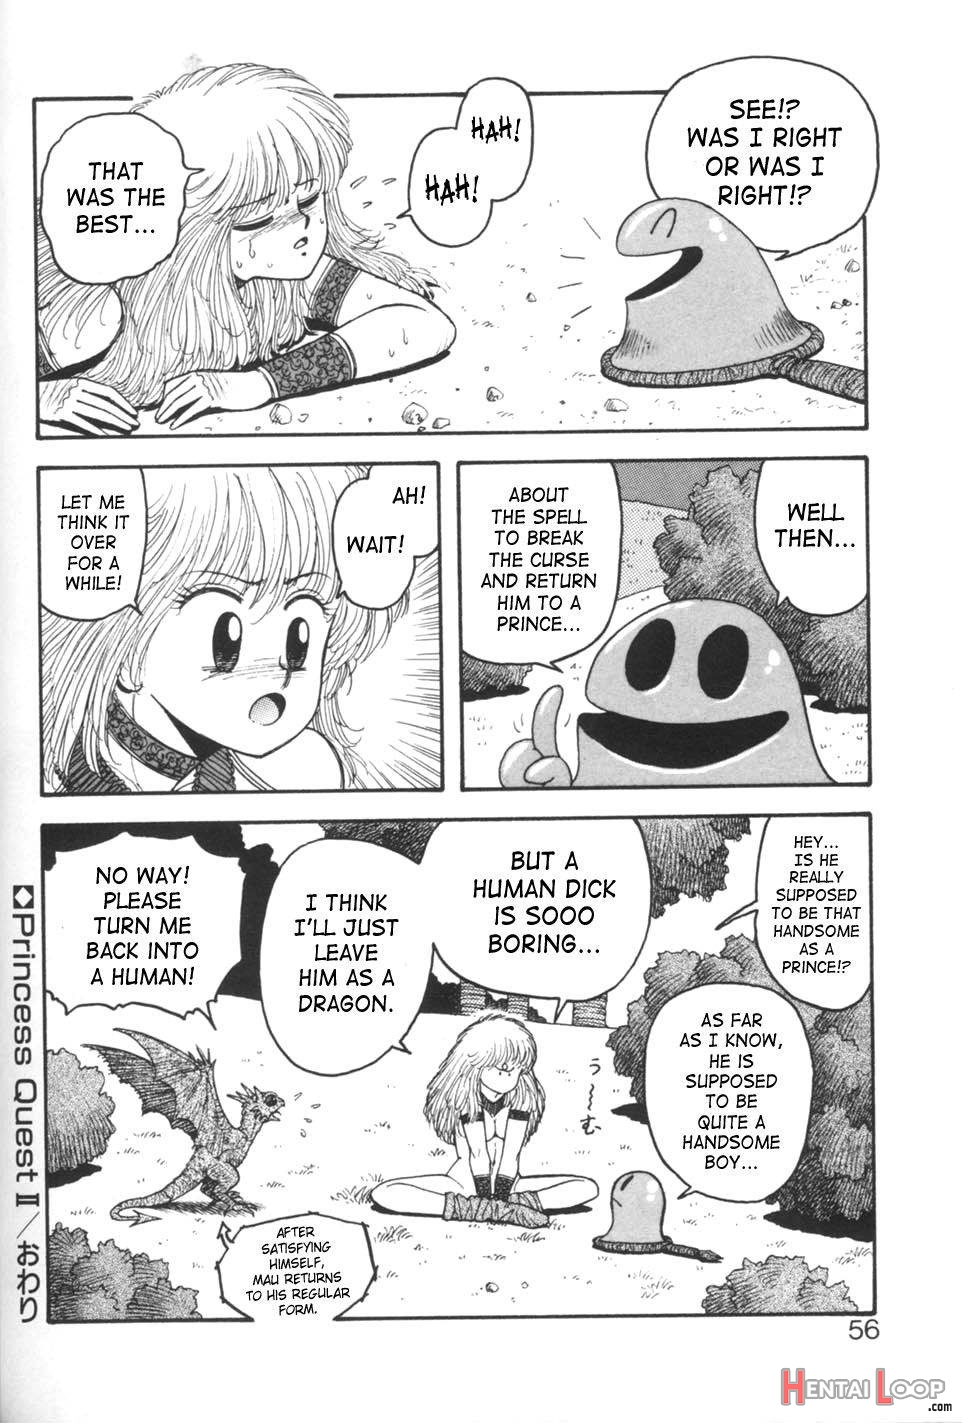 Princess Quest Saga page 53